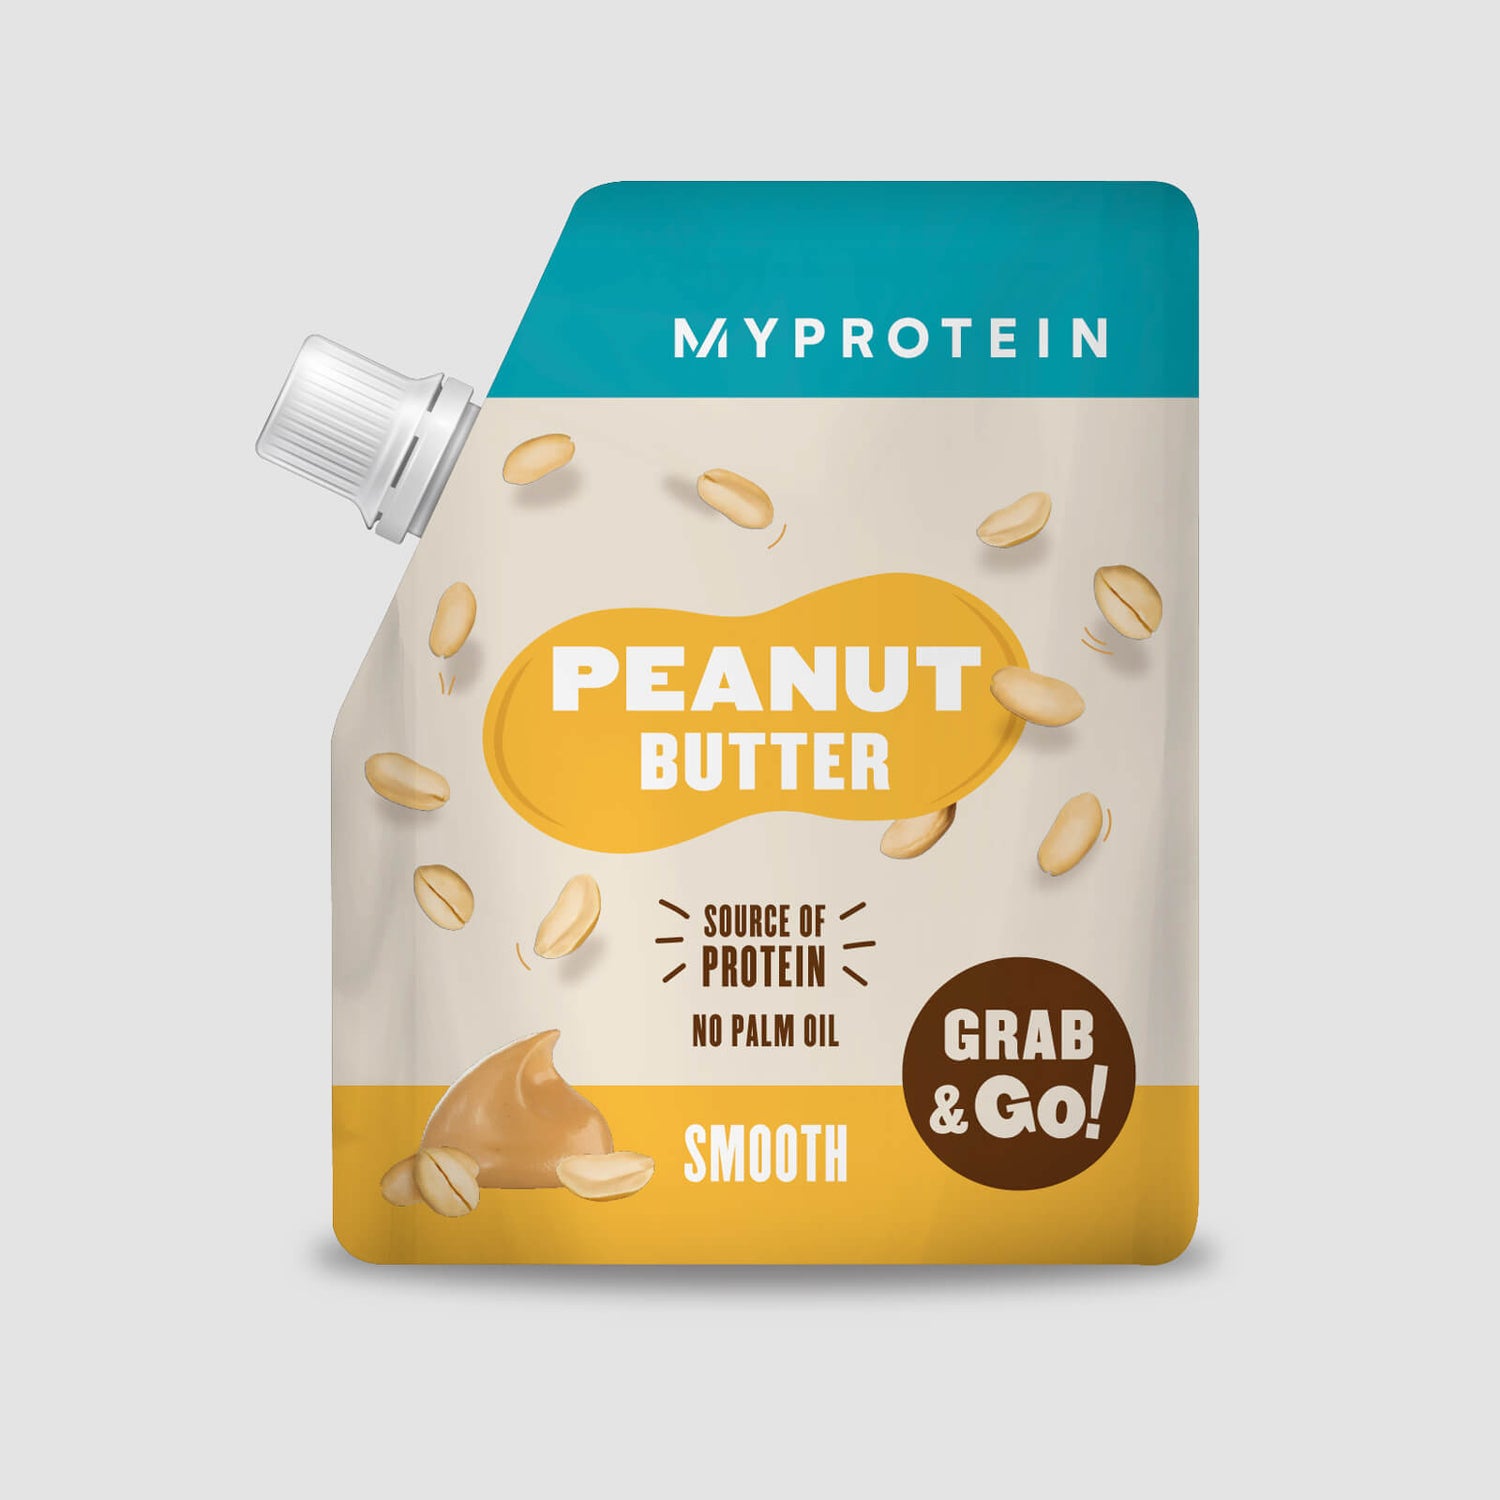 Peanut Butter Pouch - Original - Smooth